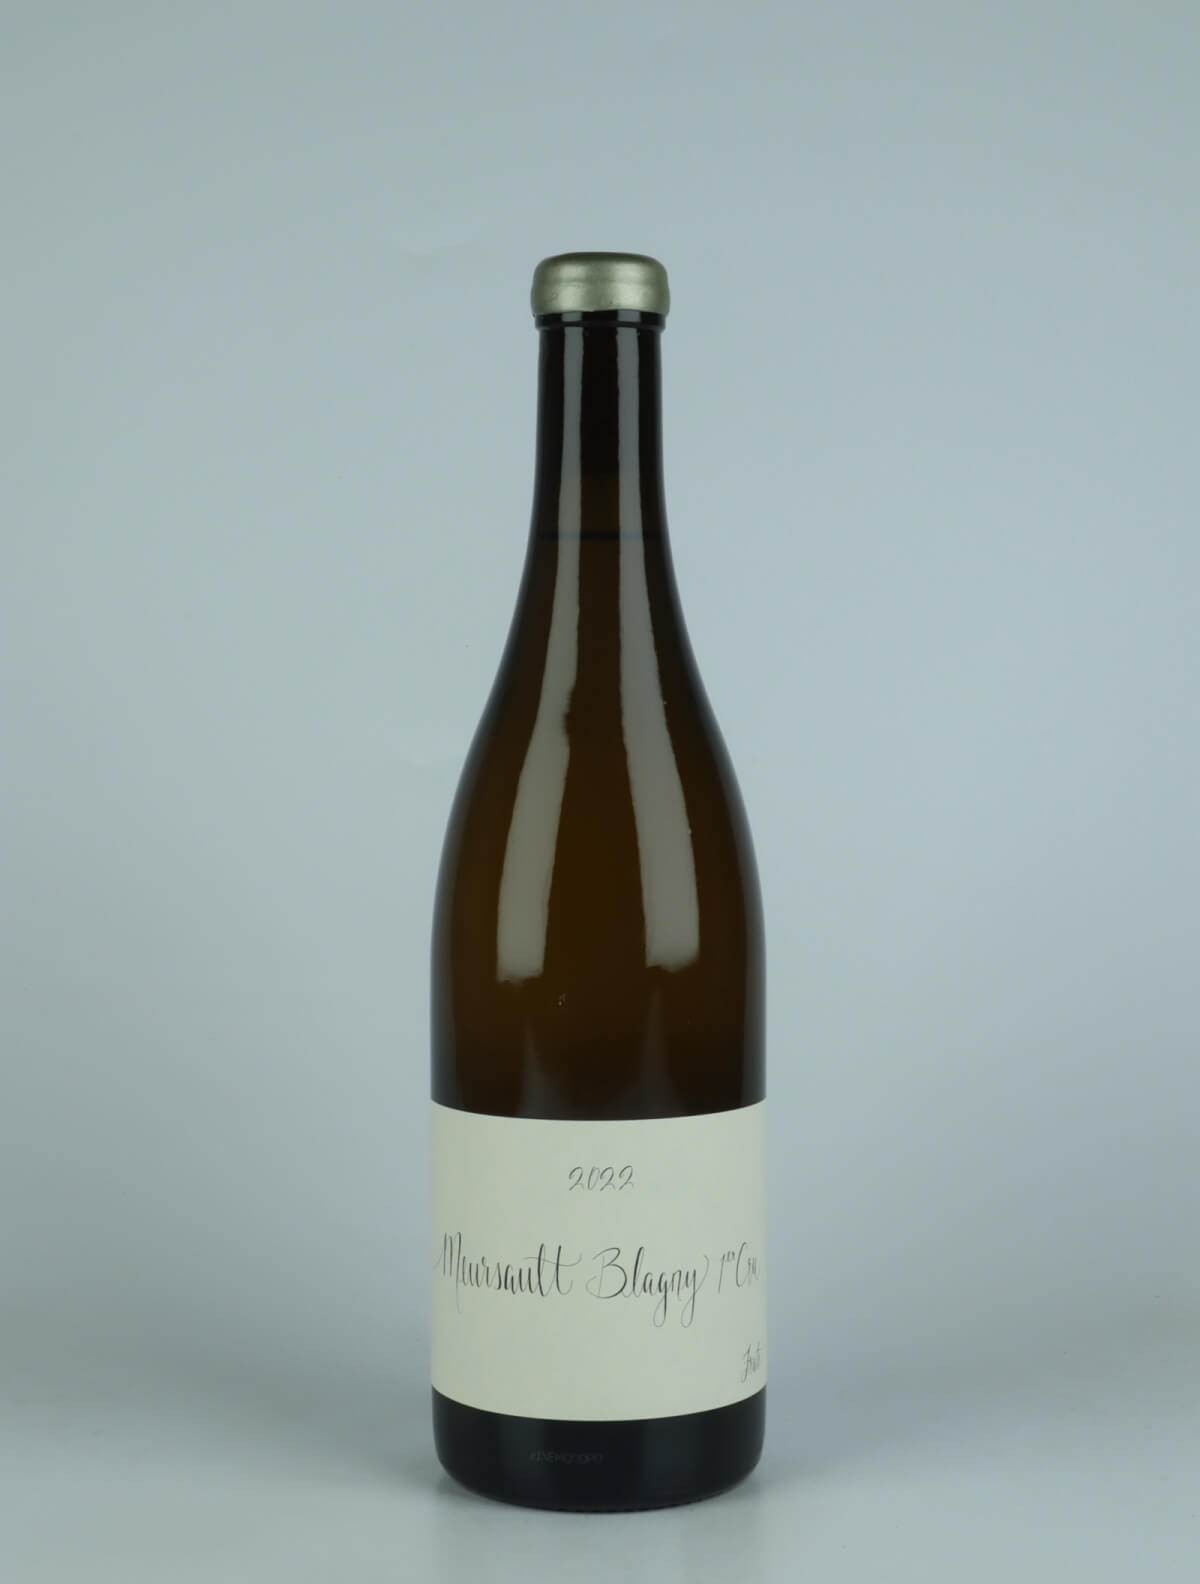 A bottle 2022 Meursault Blagny 1. Cru White wine from Fraté, Burgundy in France